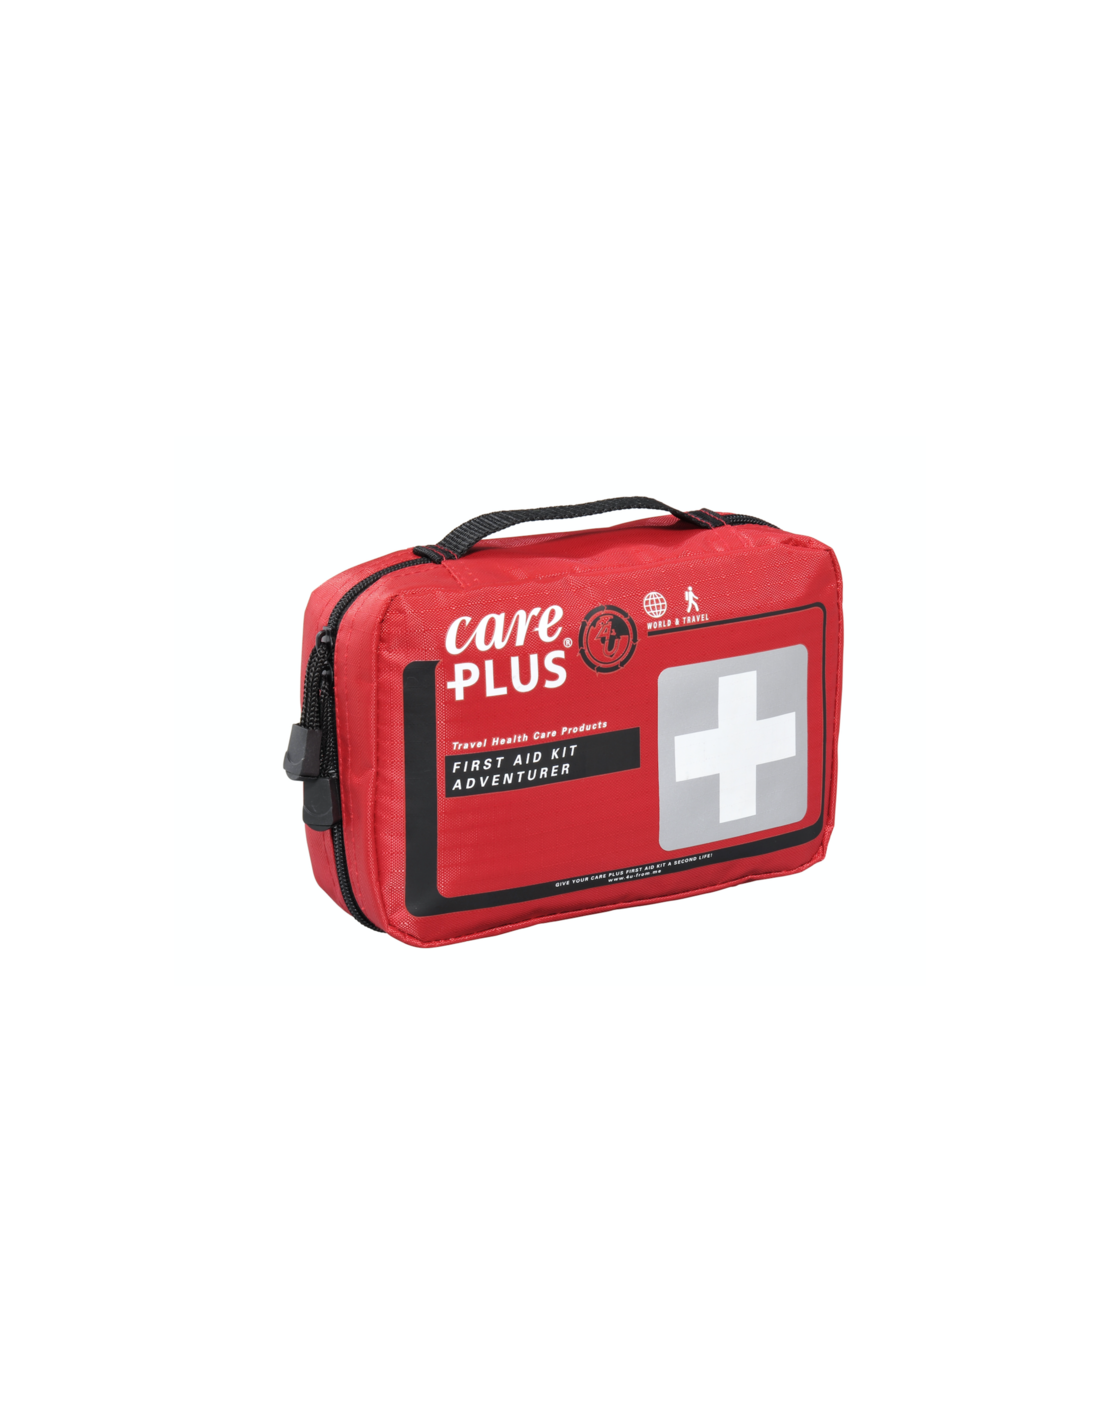 Care Plus First Aid Kit Abenteurer von Care Plus